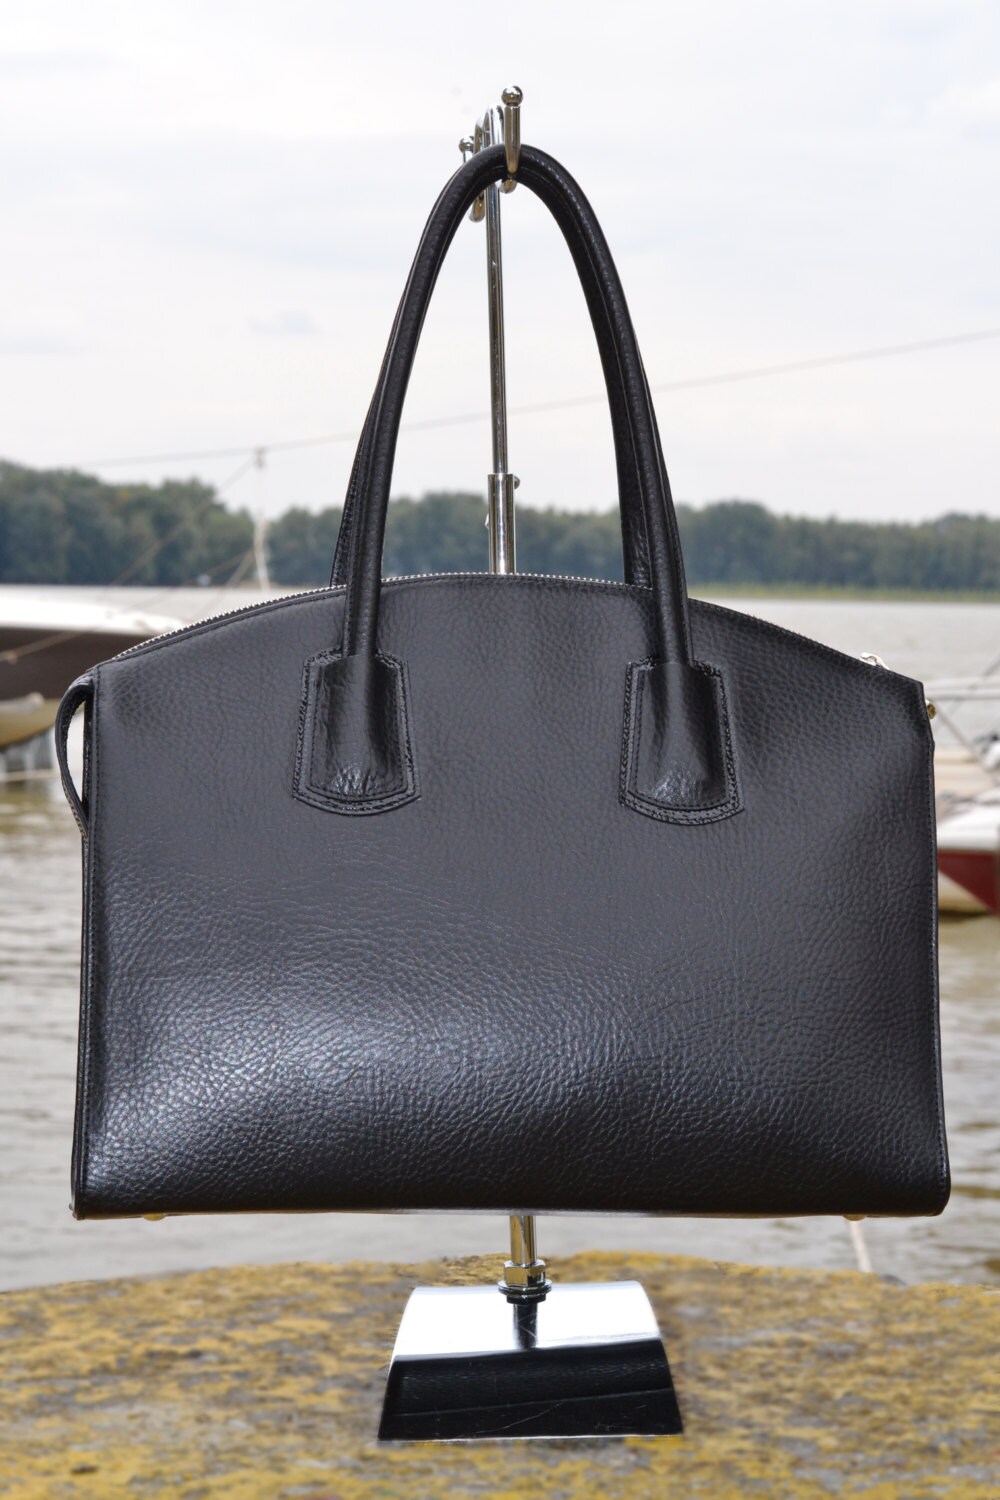 BLACK LEATHER TOTE Bag Black Leather Handbag Black Leather - Etsy